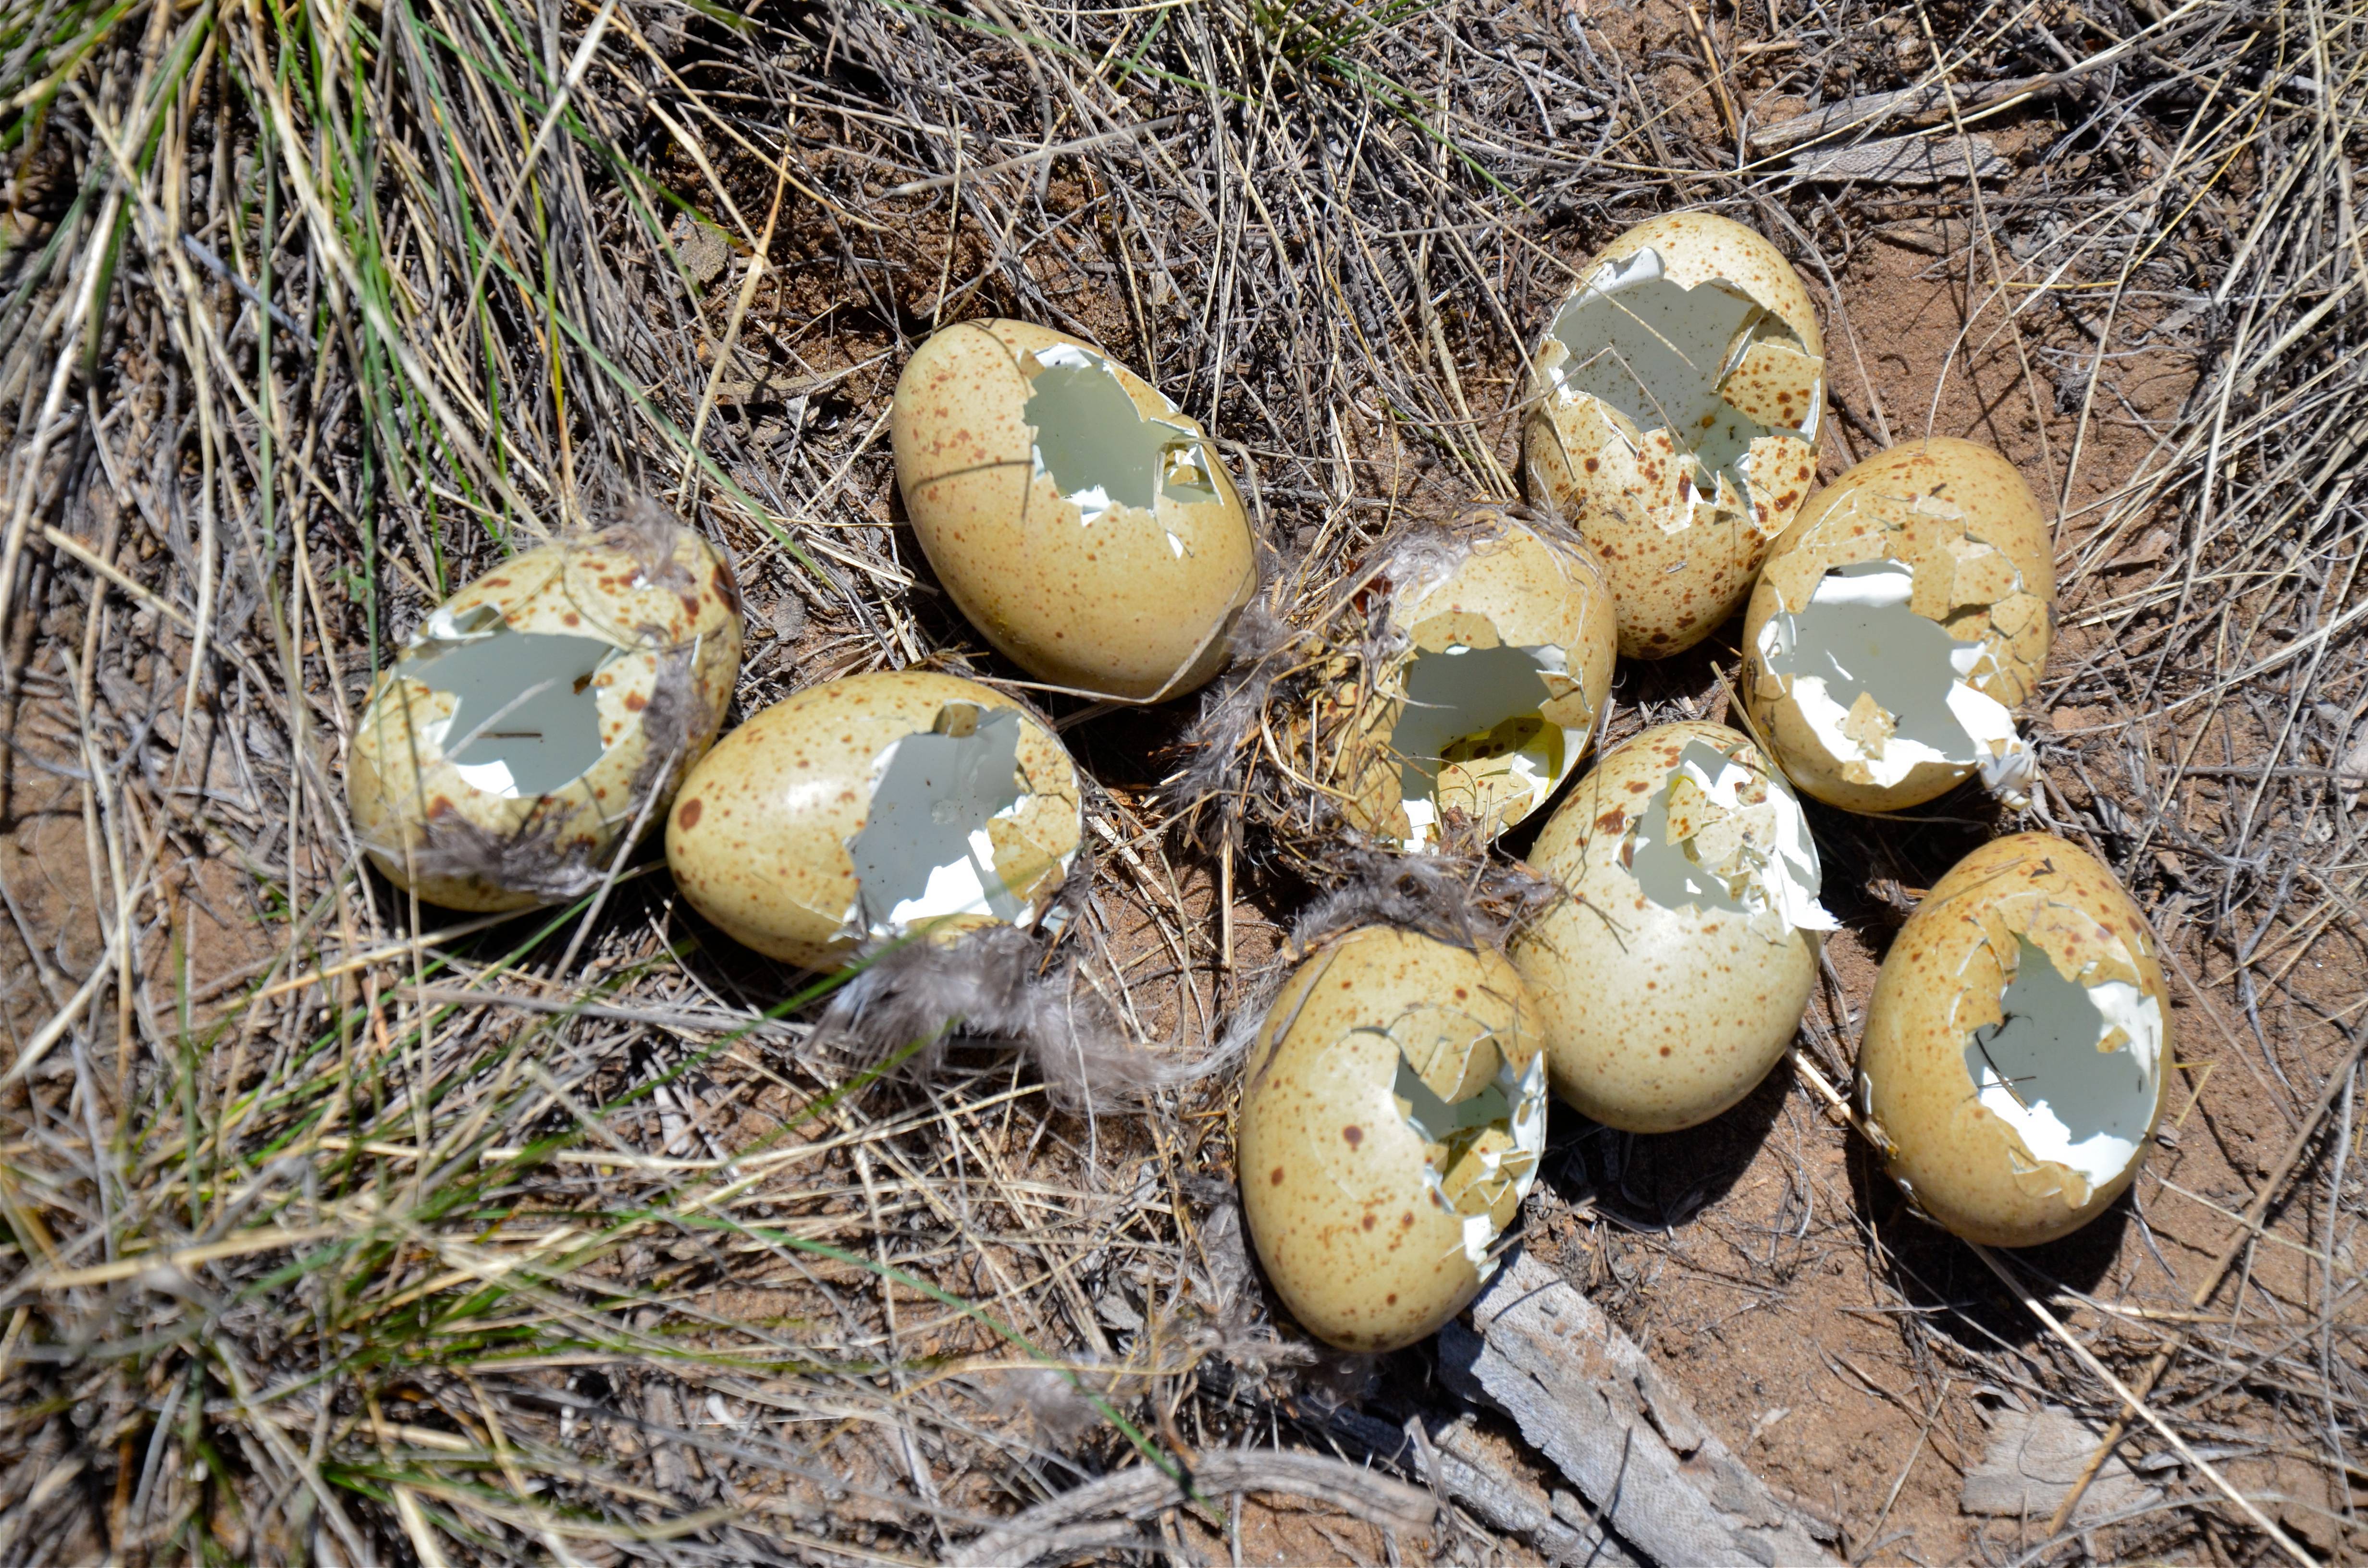 depredated sage grouse eggs on grass